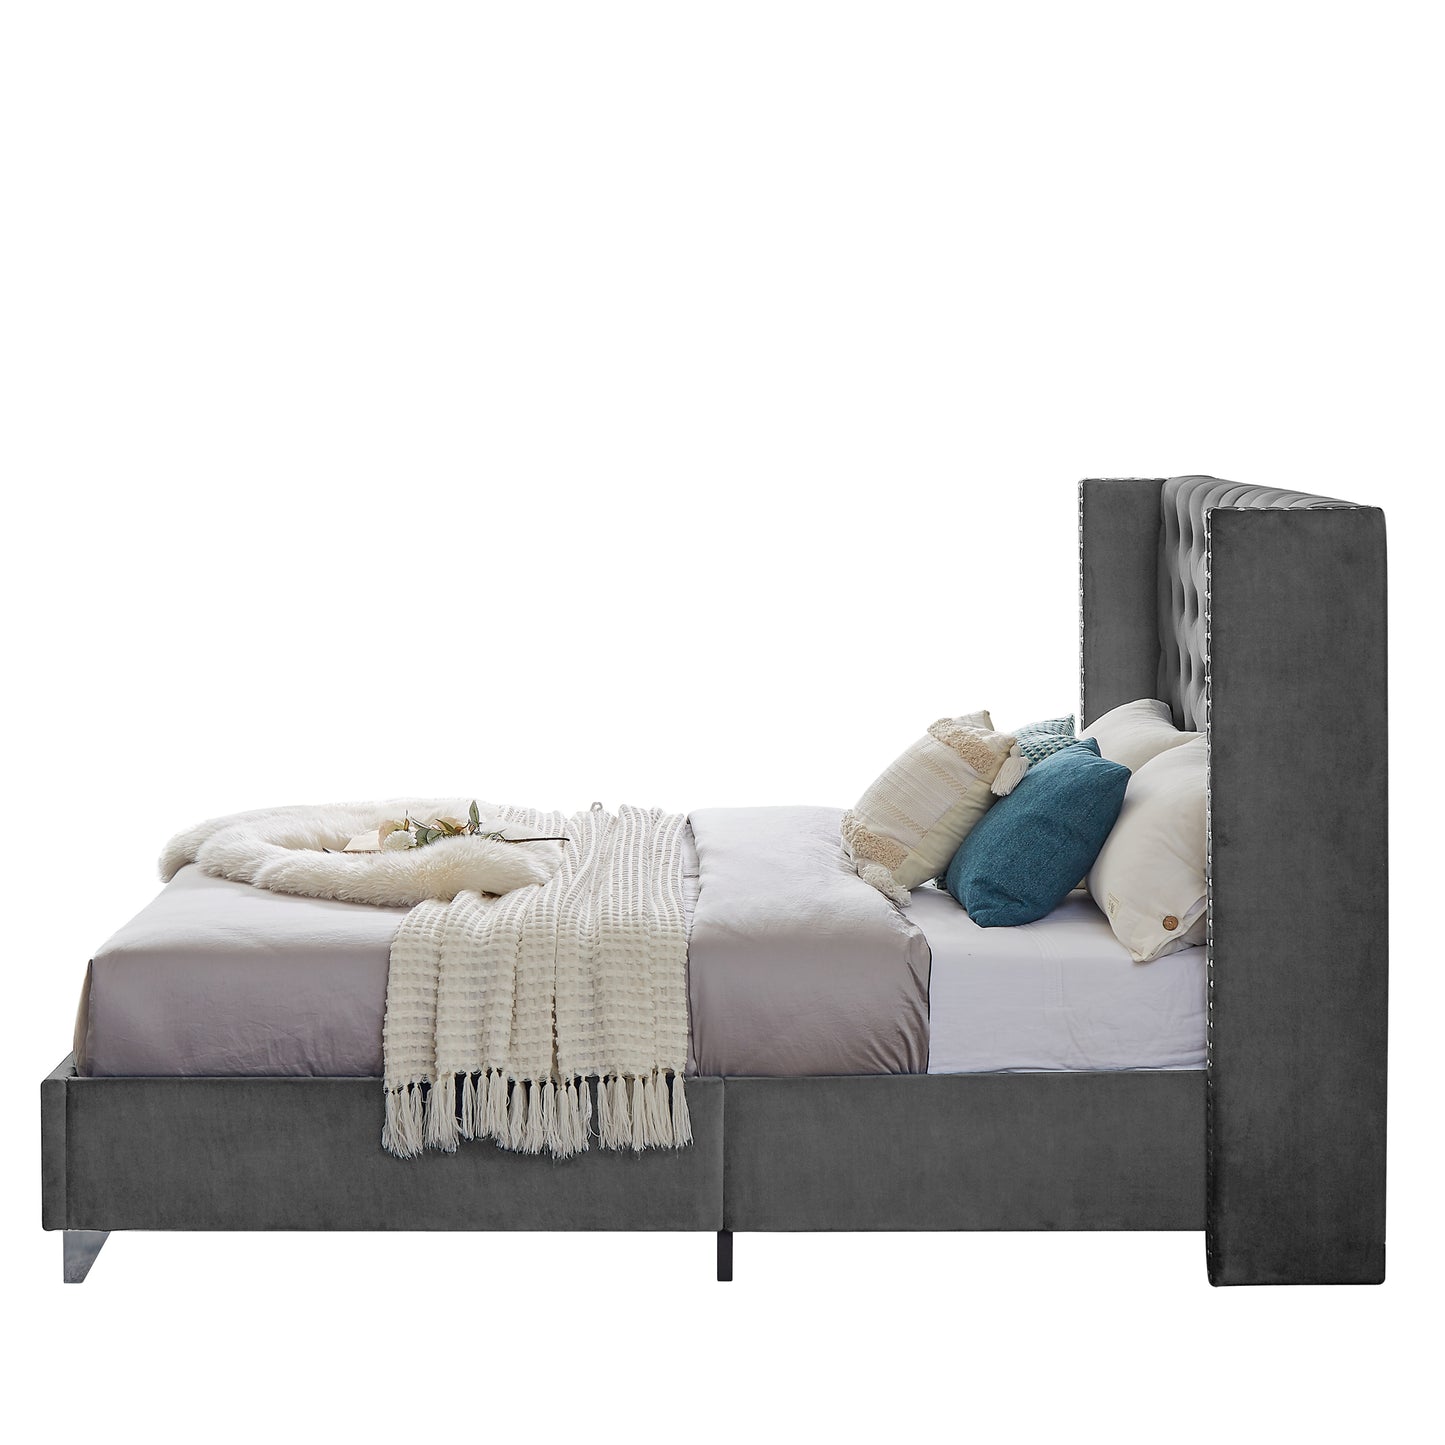 B100S Queen bed,  Button designed Headboard, strong wooden slats + metal support feet, Gray Flannelette